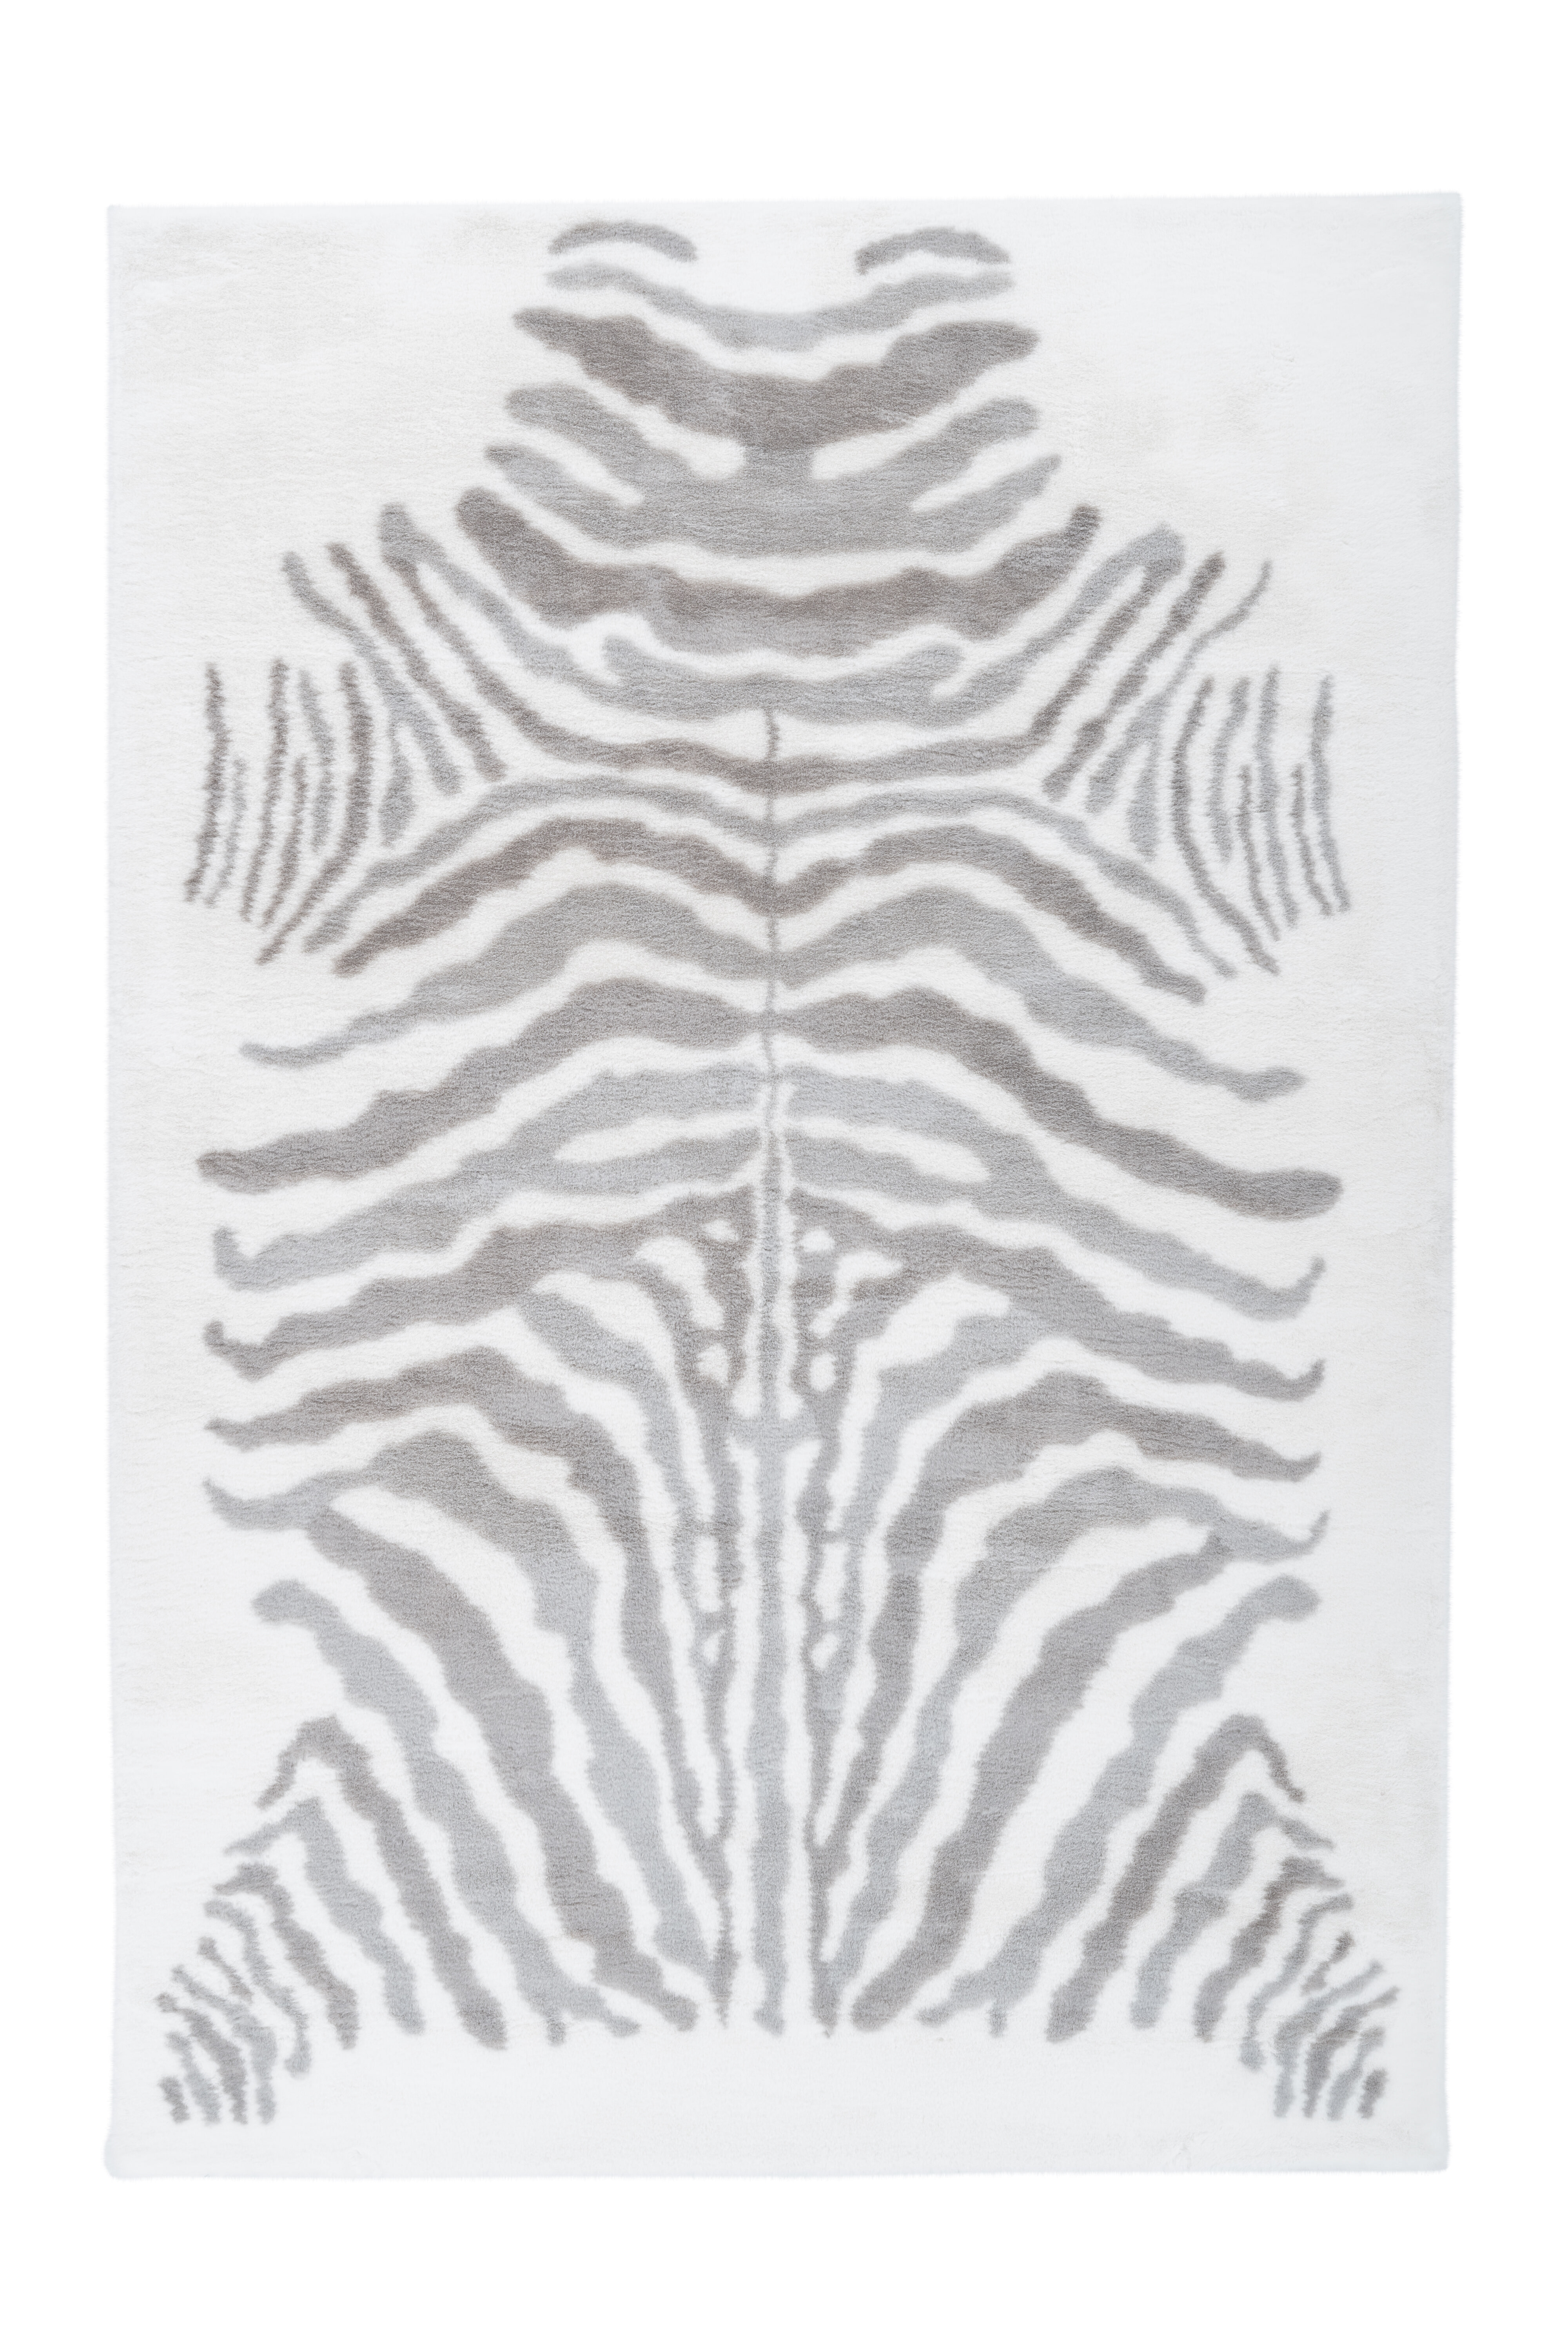 Kayoom Vloerkleed 'Rabbit Animal' kleur grijs - wit, 160 x 230cm